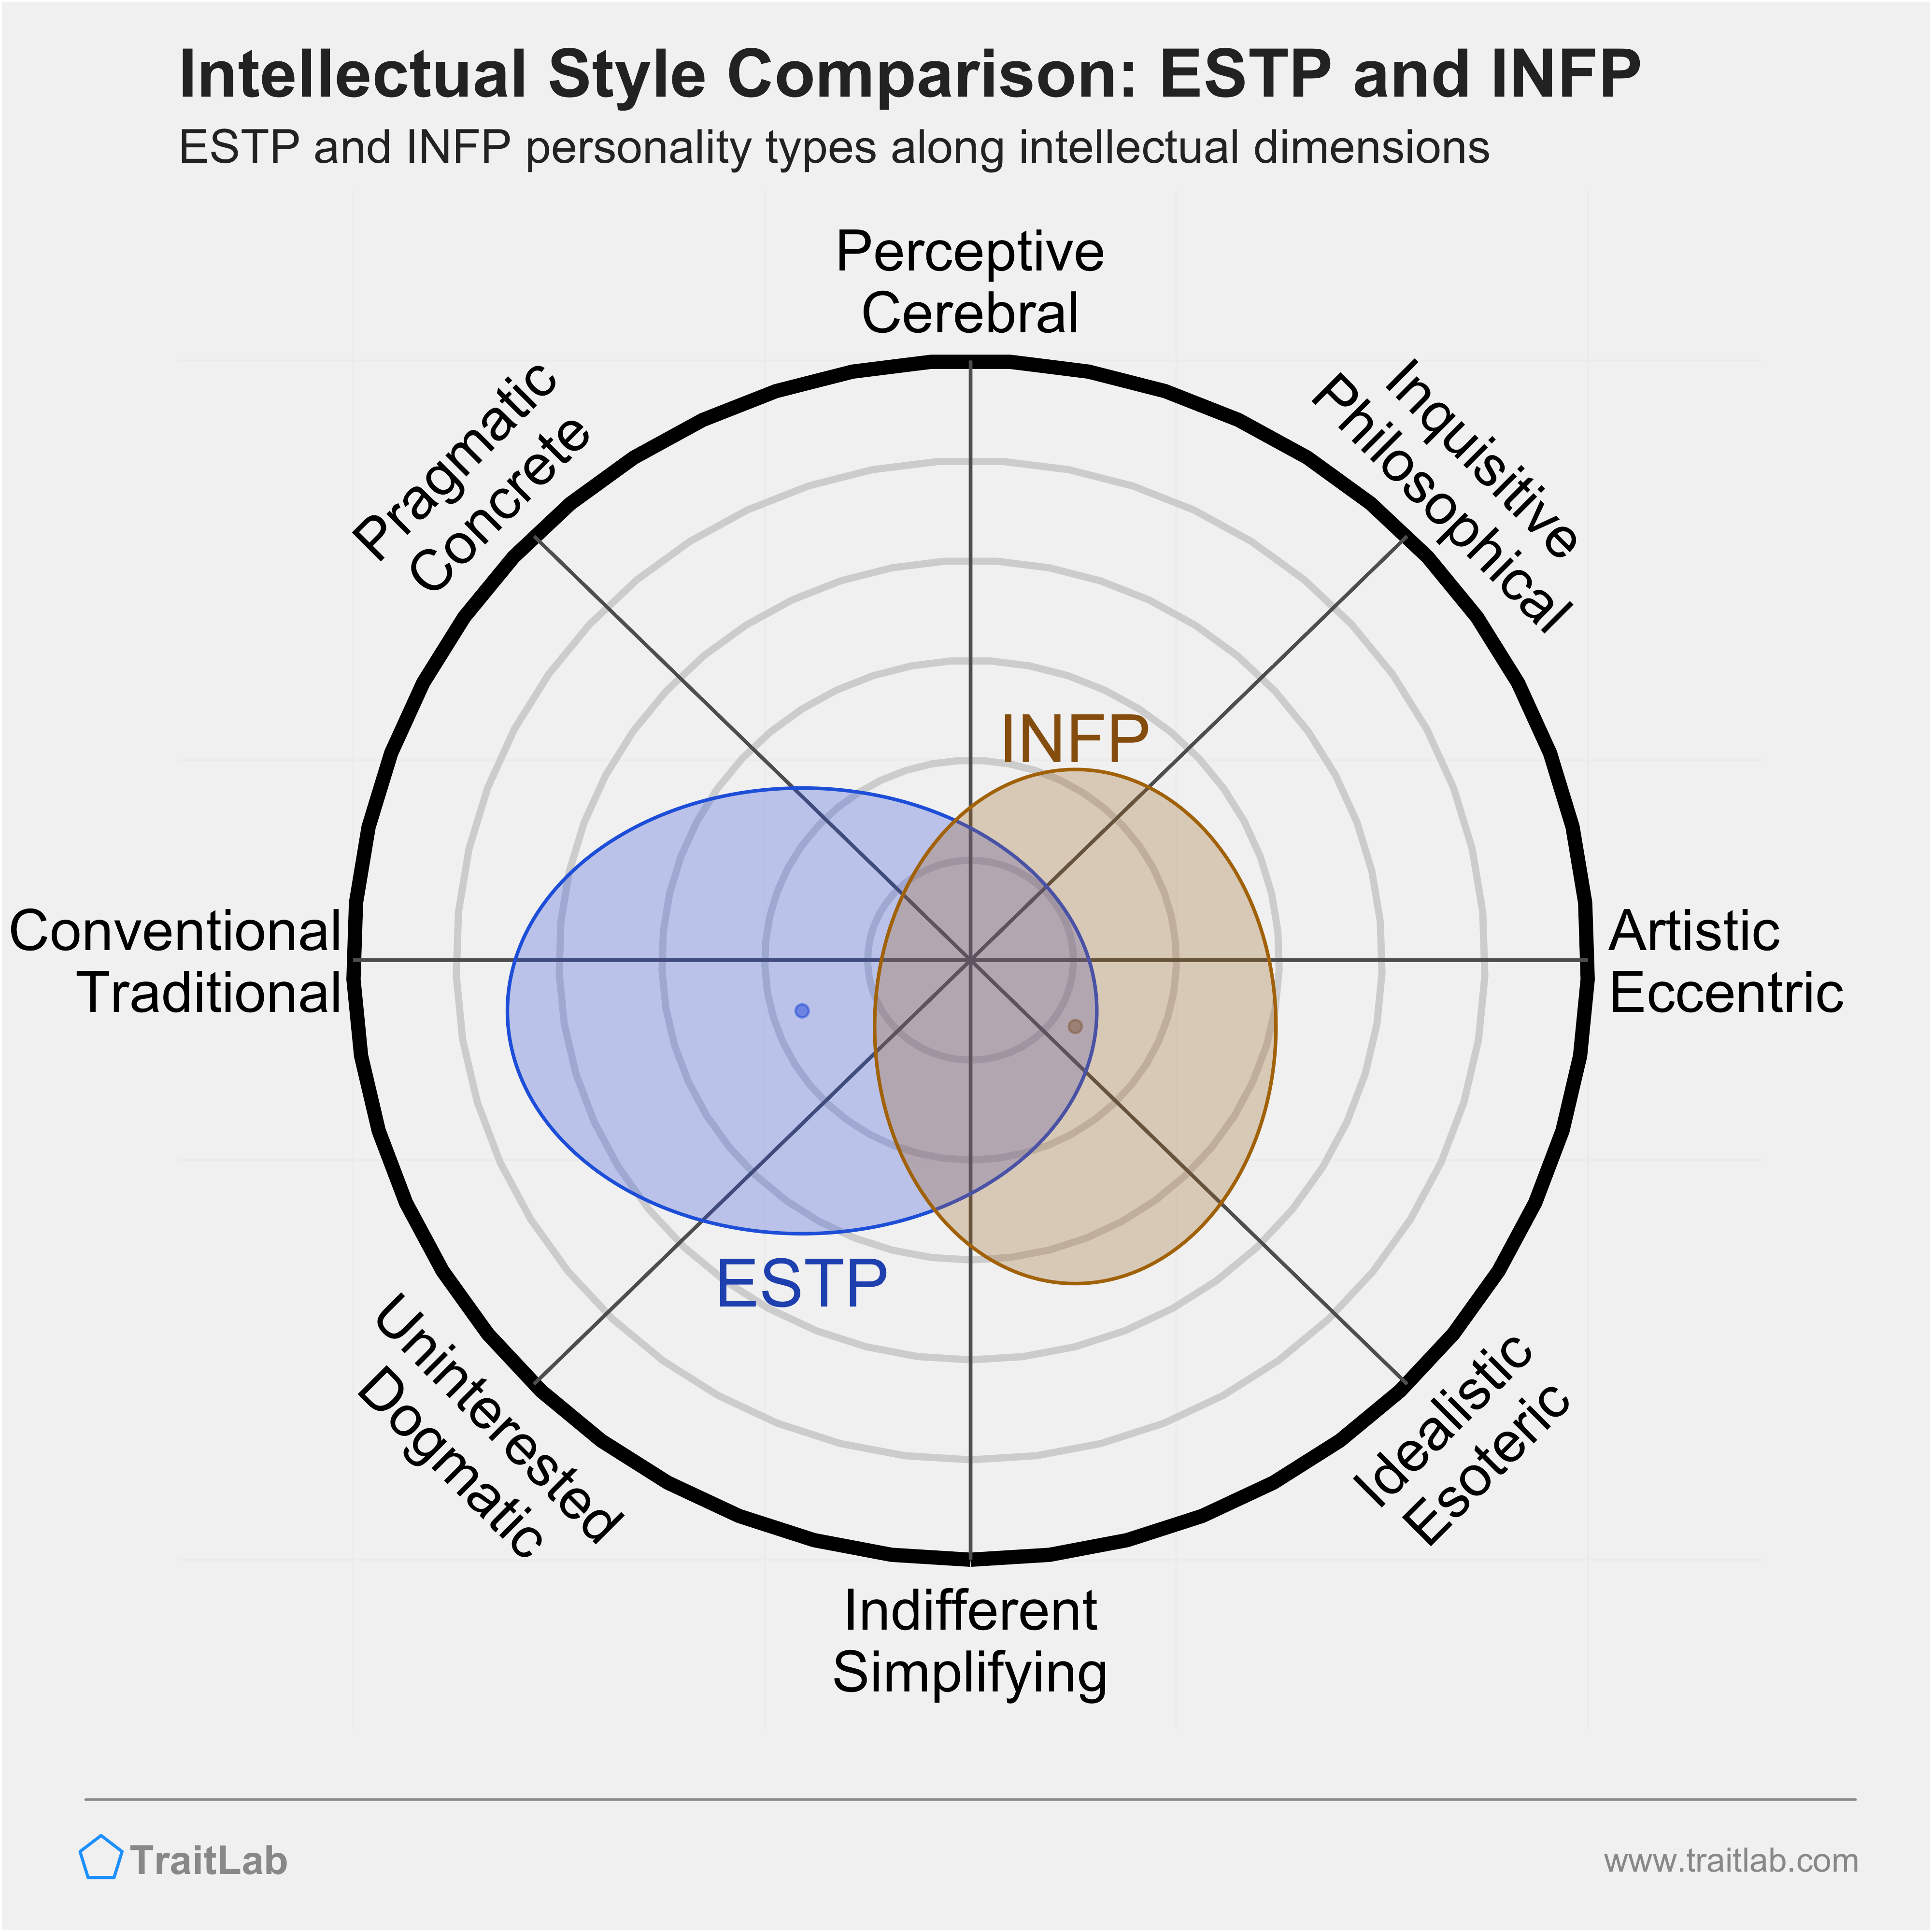 ESTP and INFP comparison across intellectual dimensions